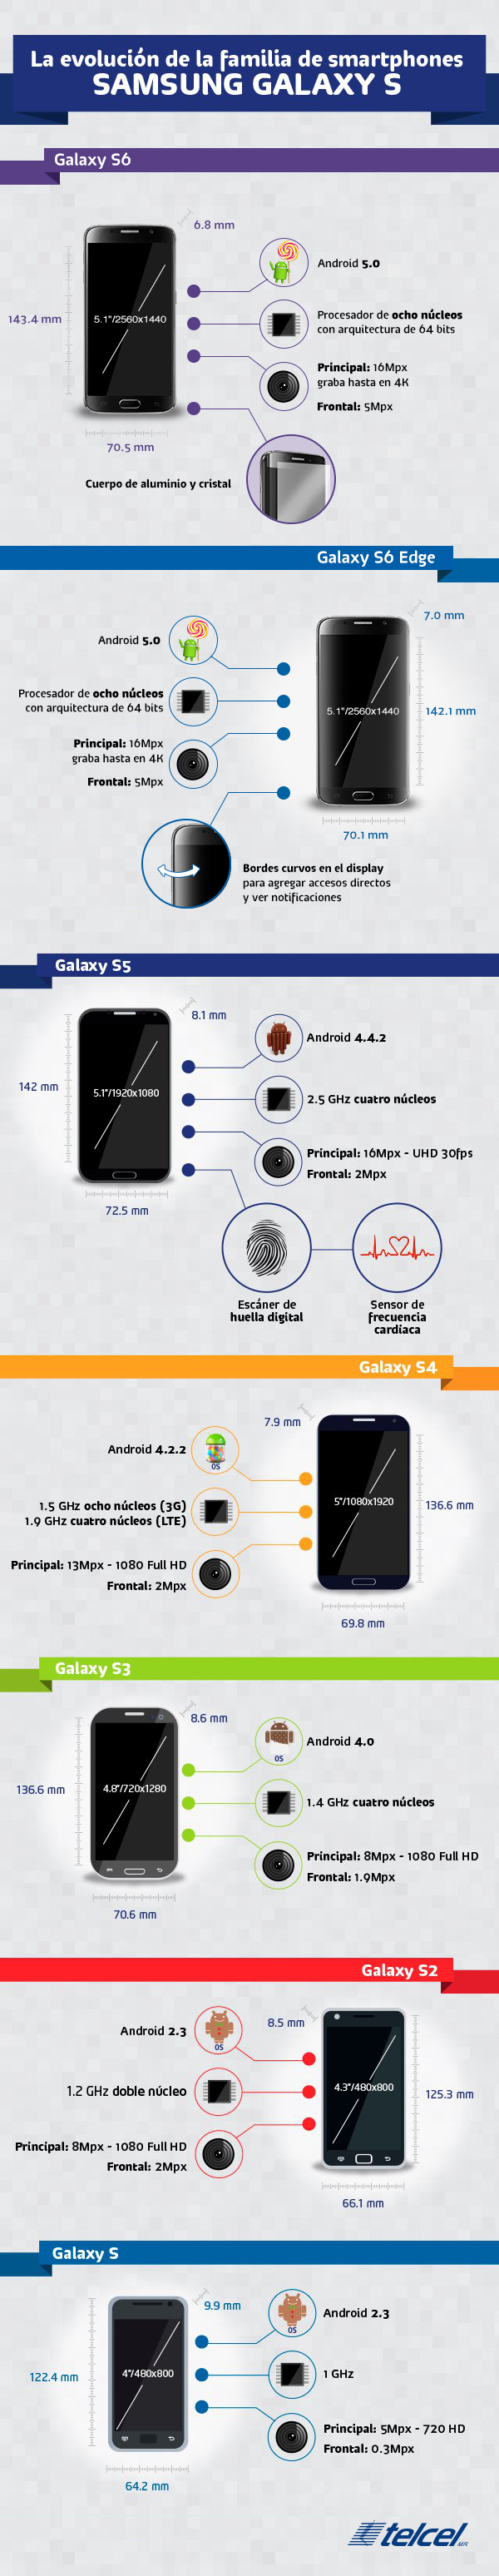 Infografia-Galaxy-S